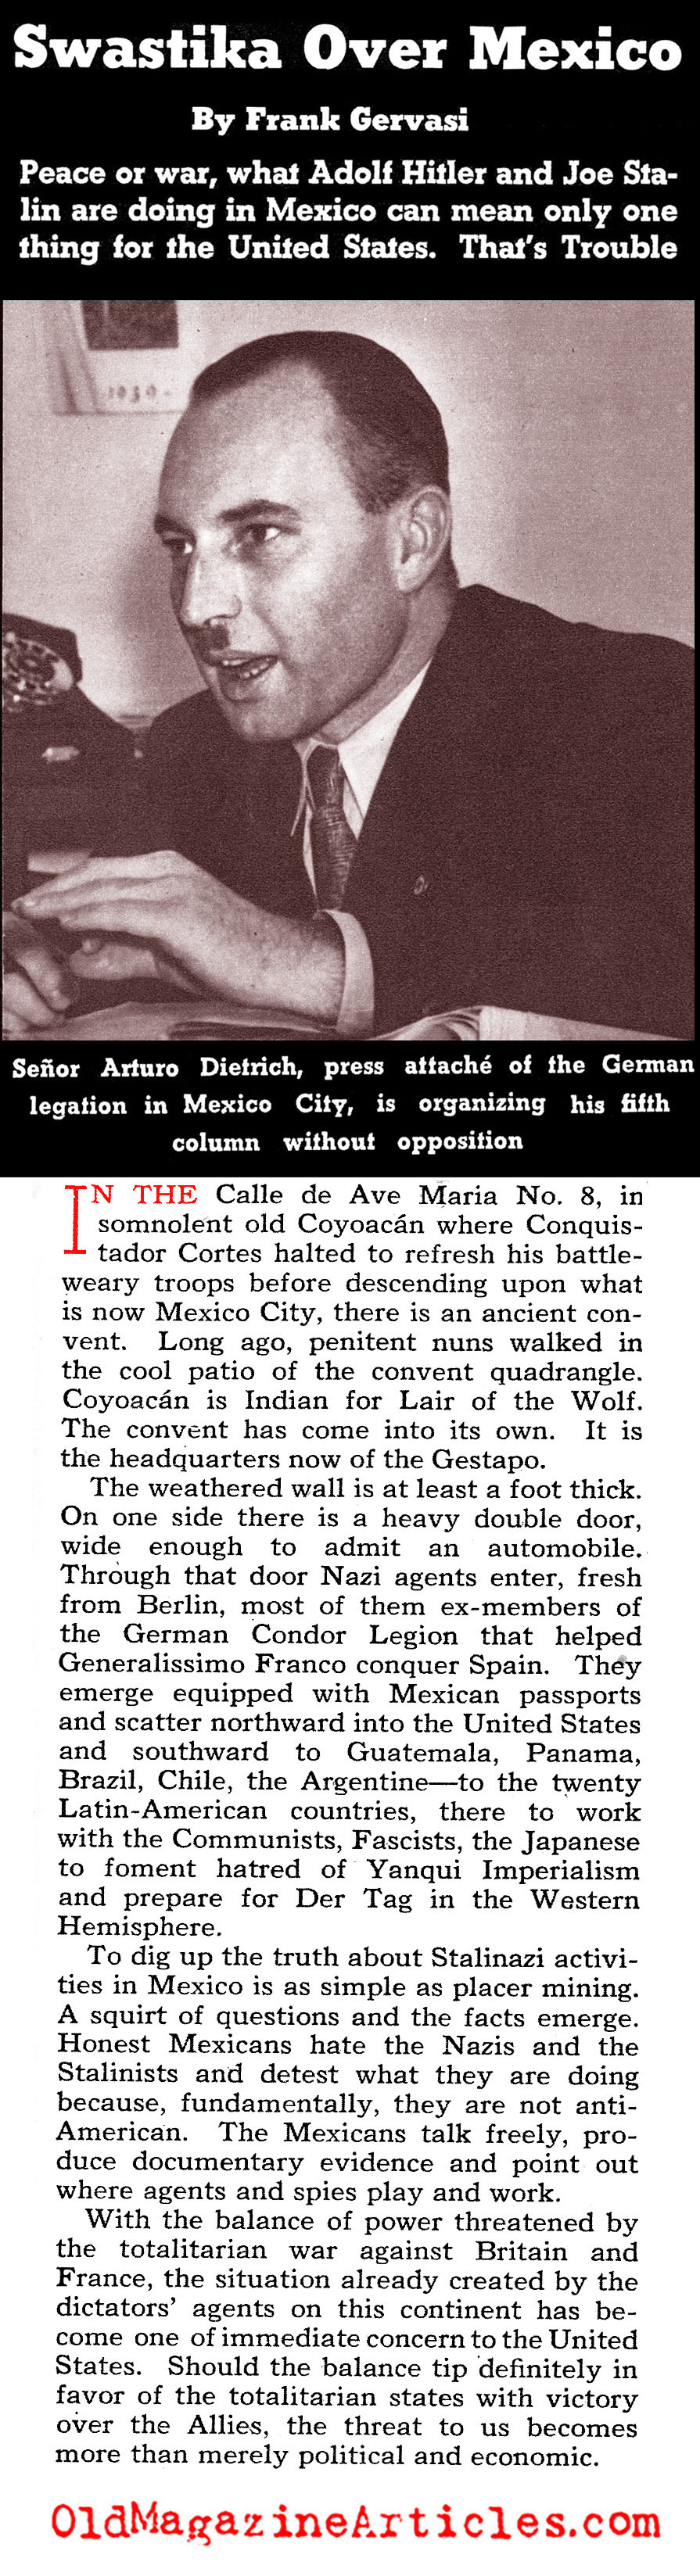 Hitler's Men in Mexico (Collier's Magazine, 1940)